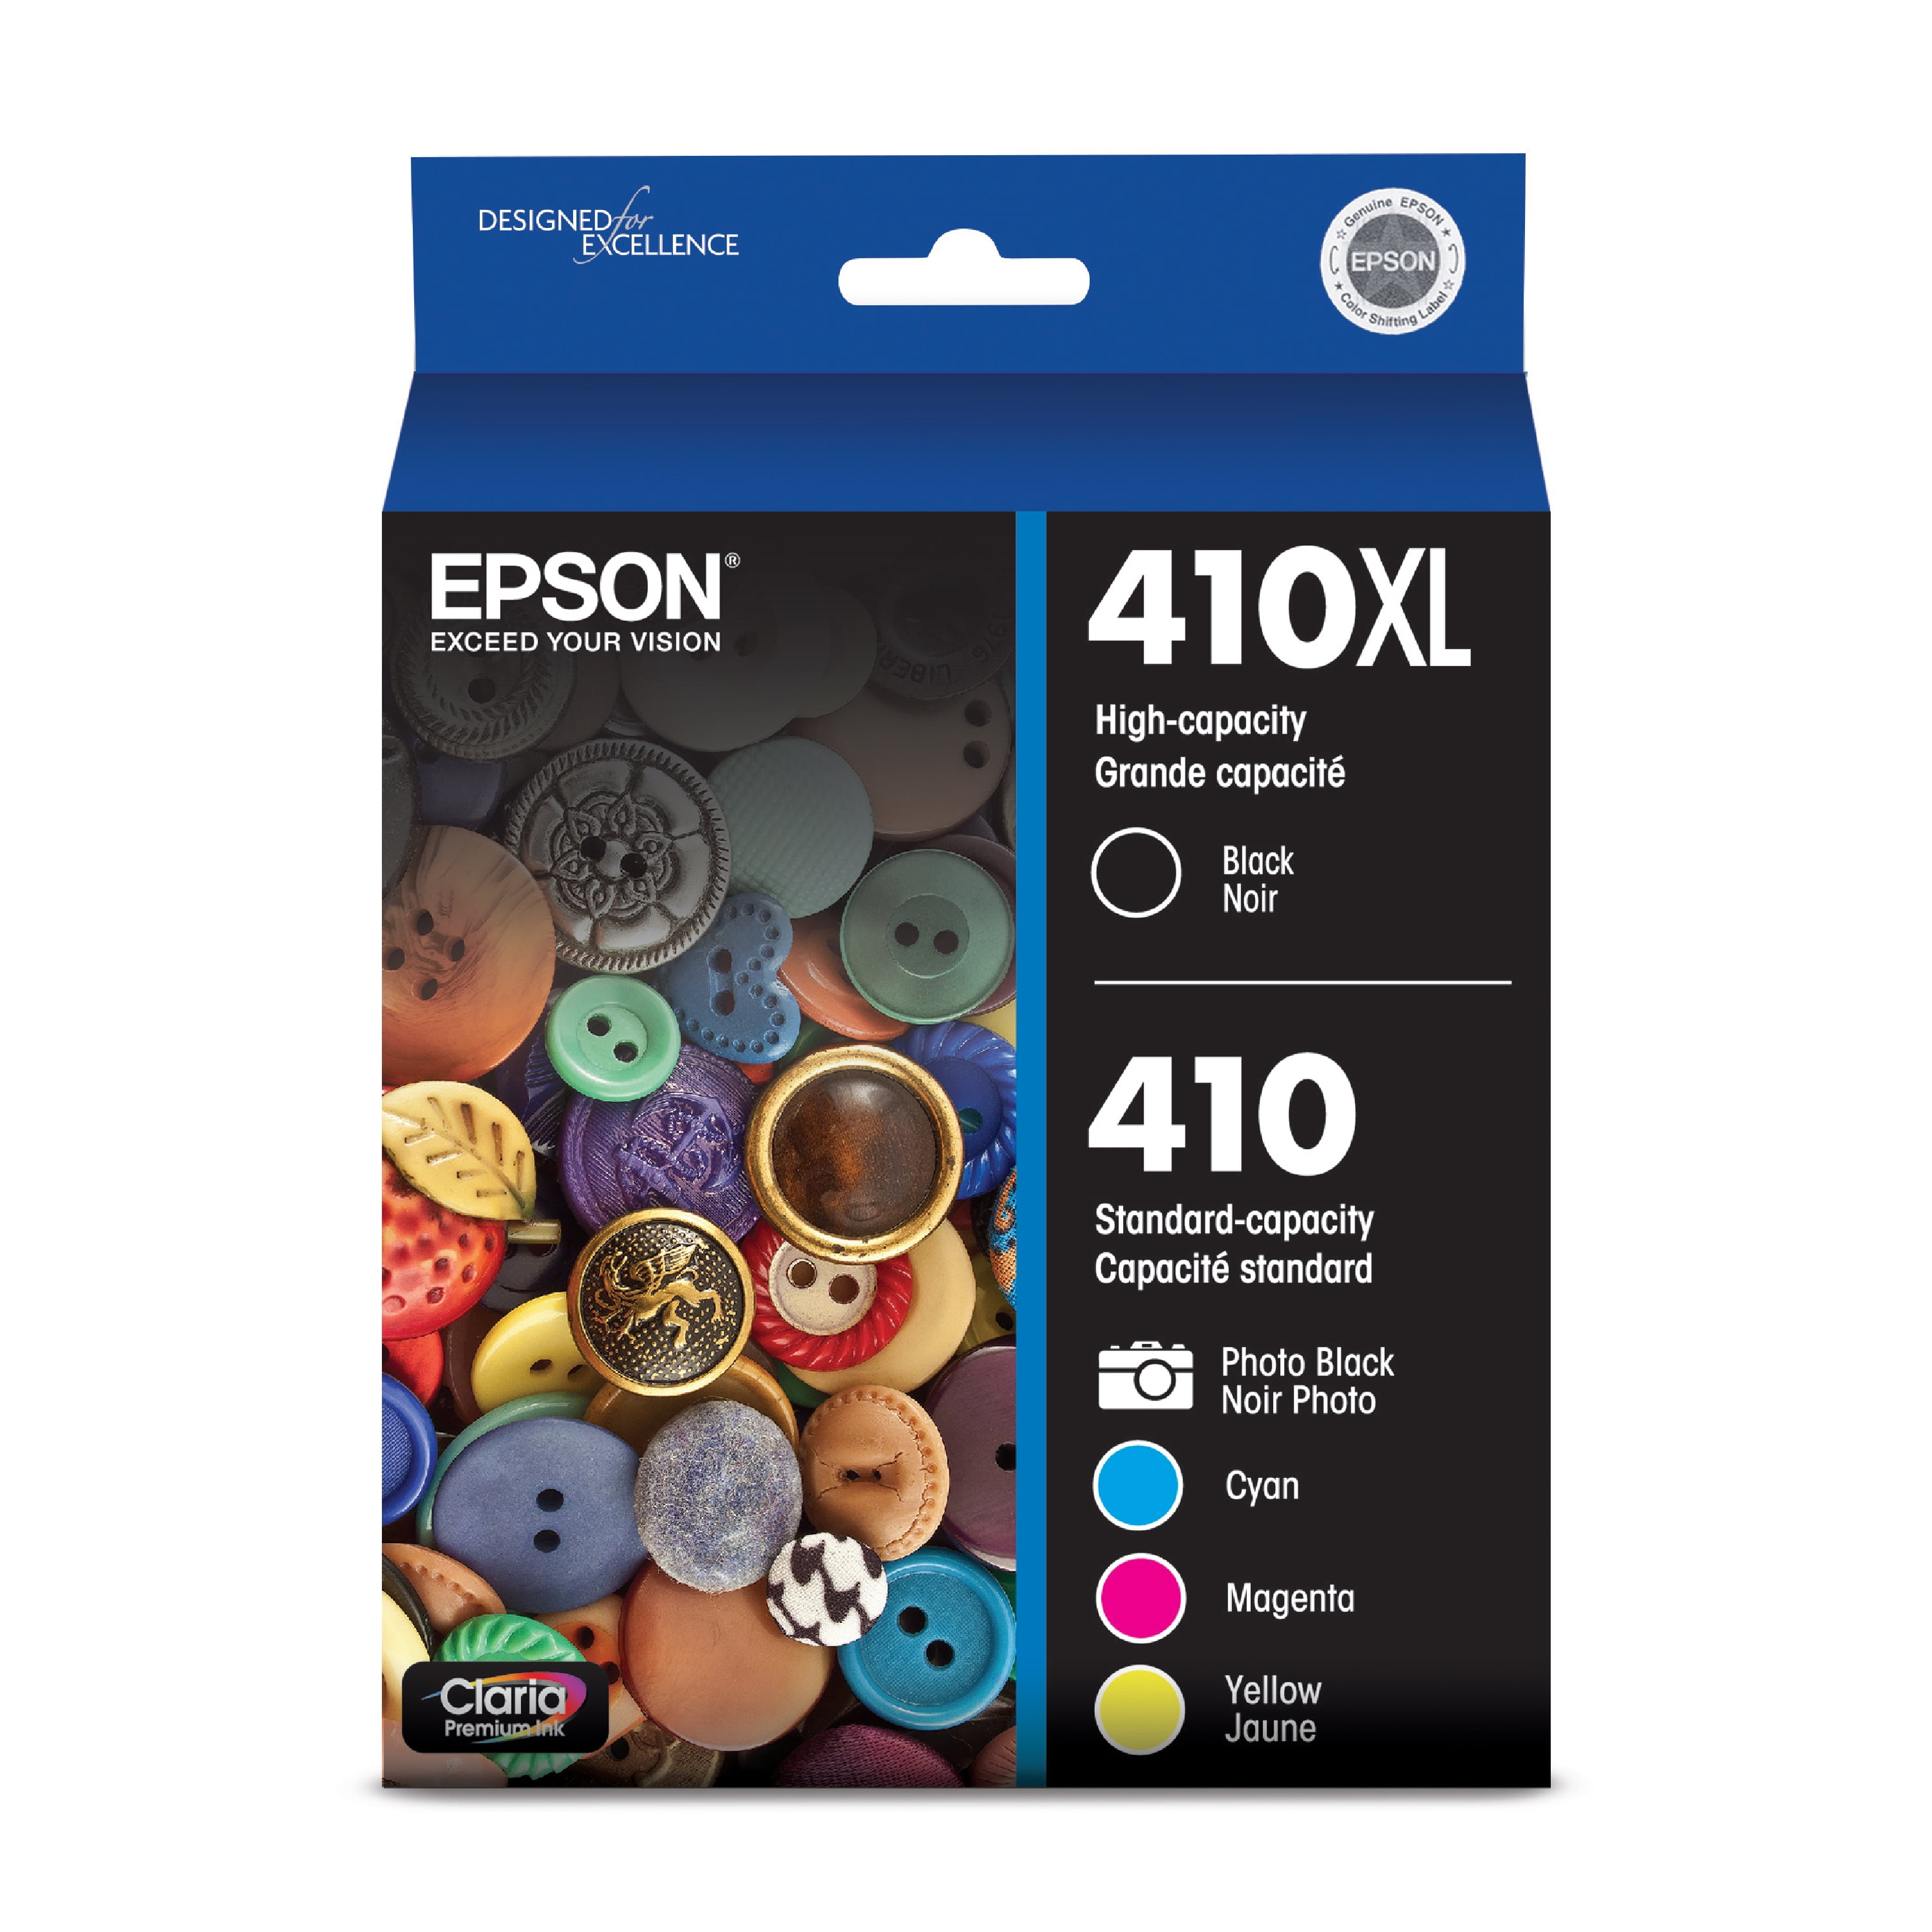 EPSON T410 Claria Premium Genuine Ink High Capacity Black & Standard Color Cartridge Combo Pack